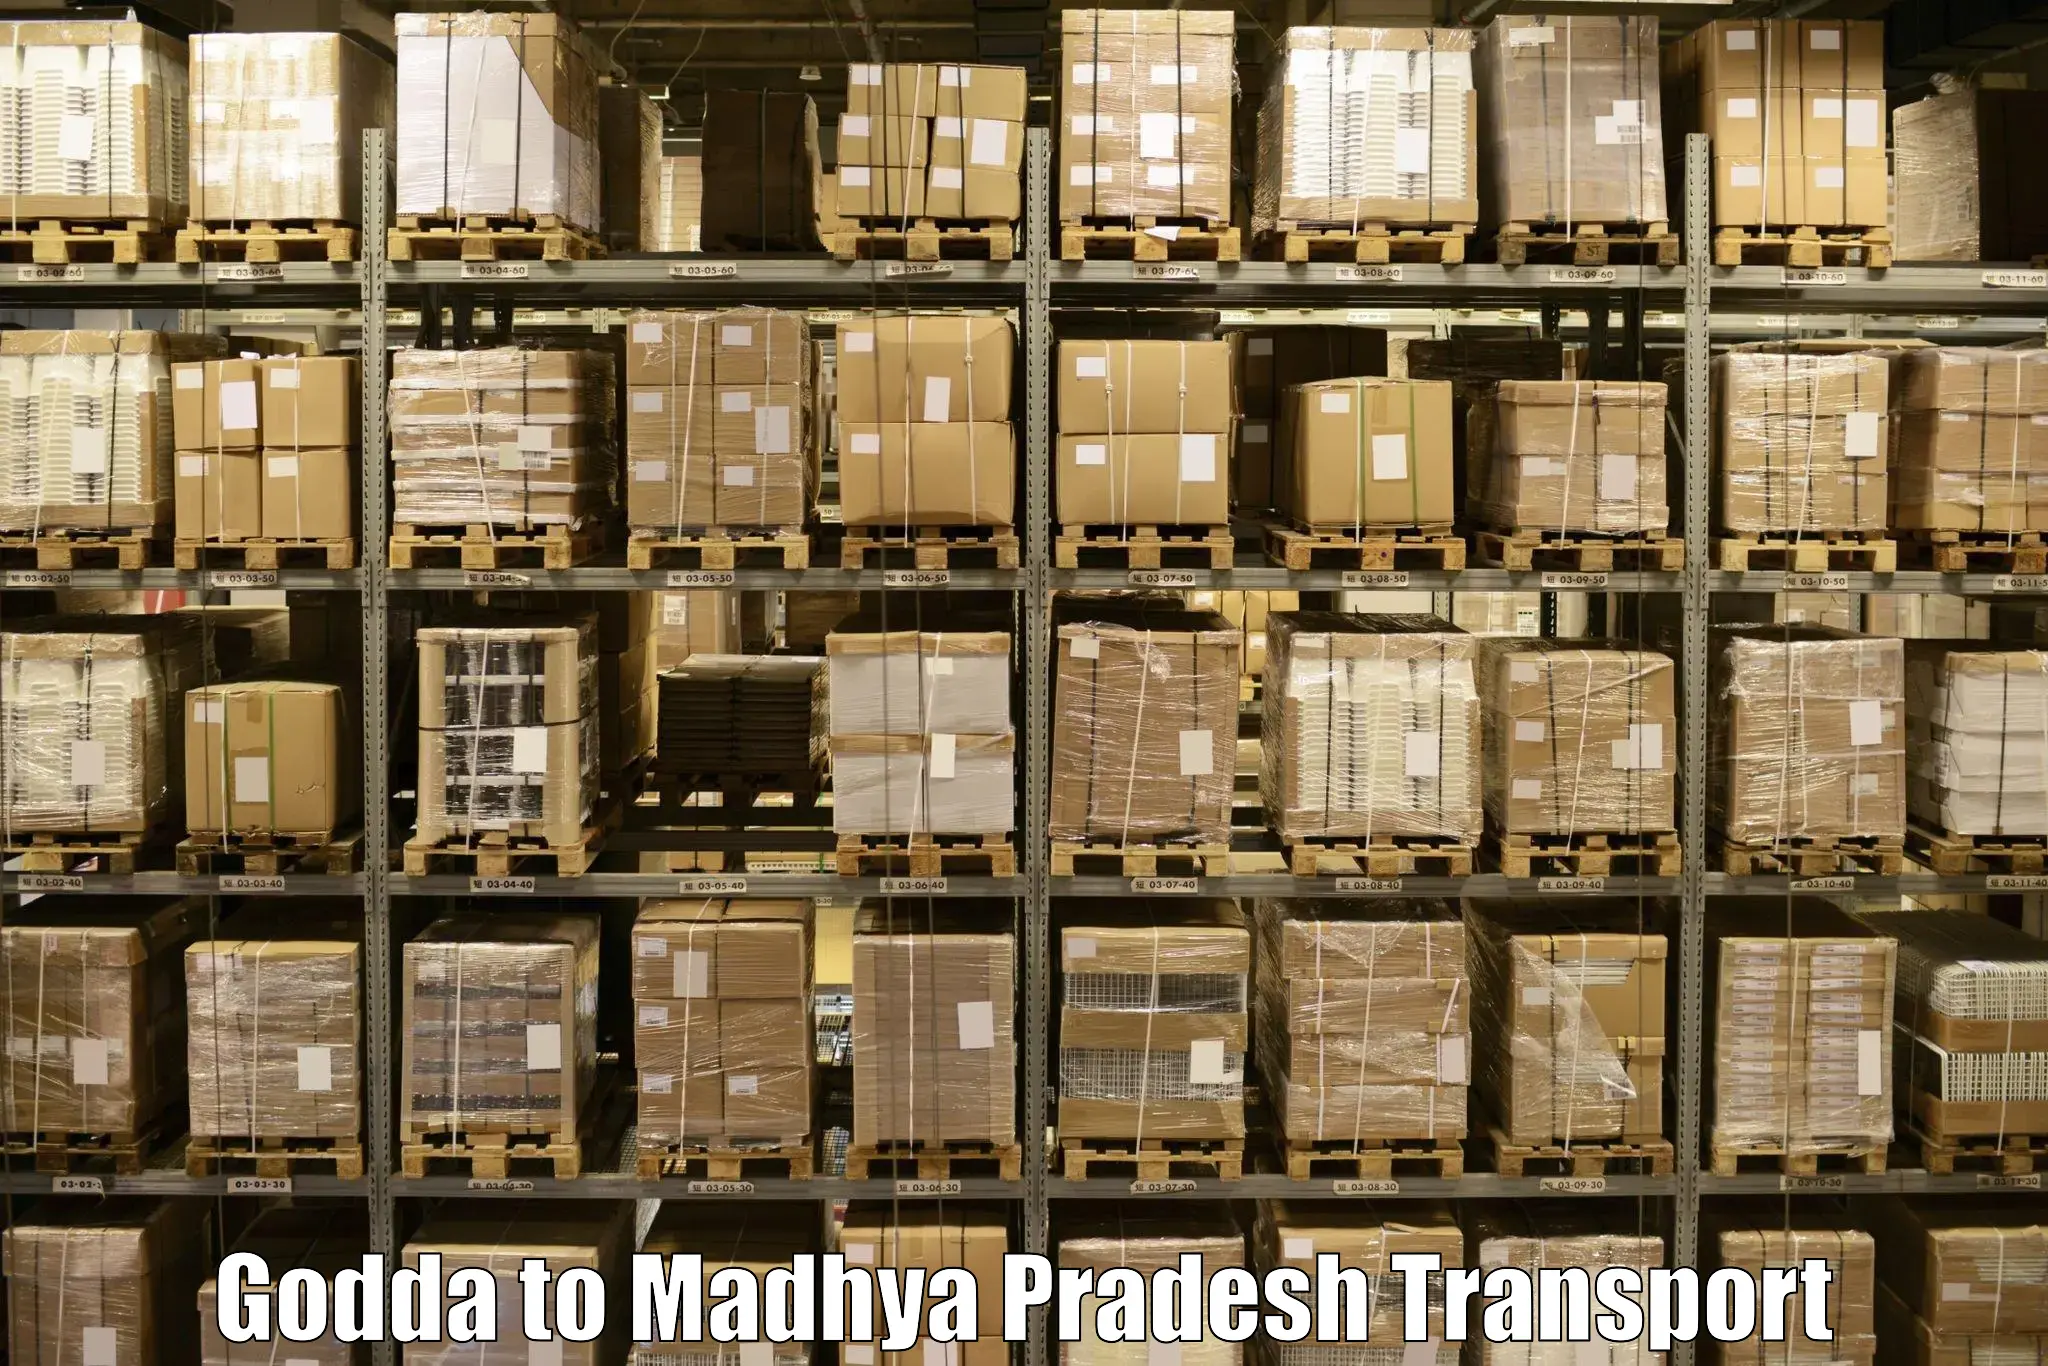 Shipping partner Godda to Anuppur